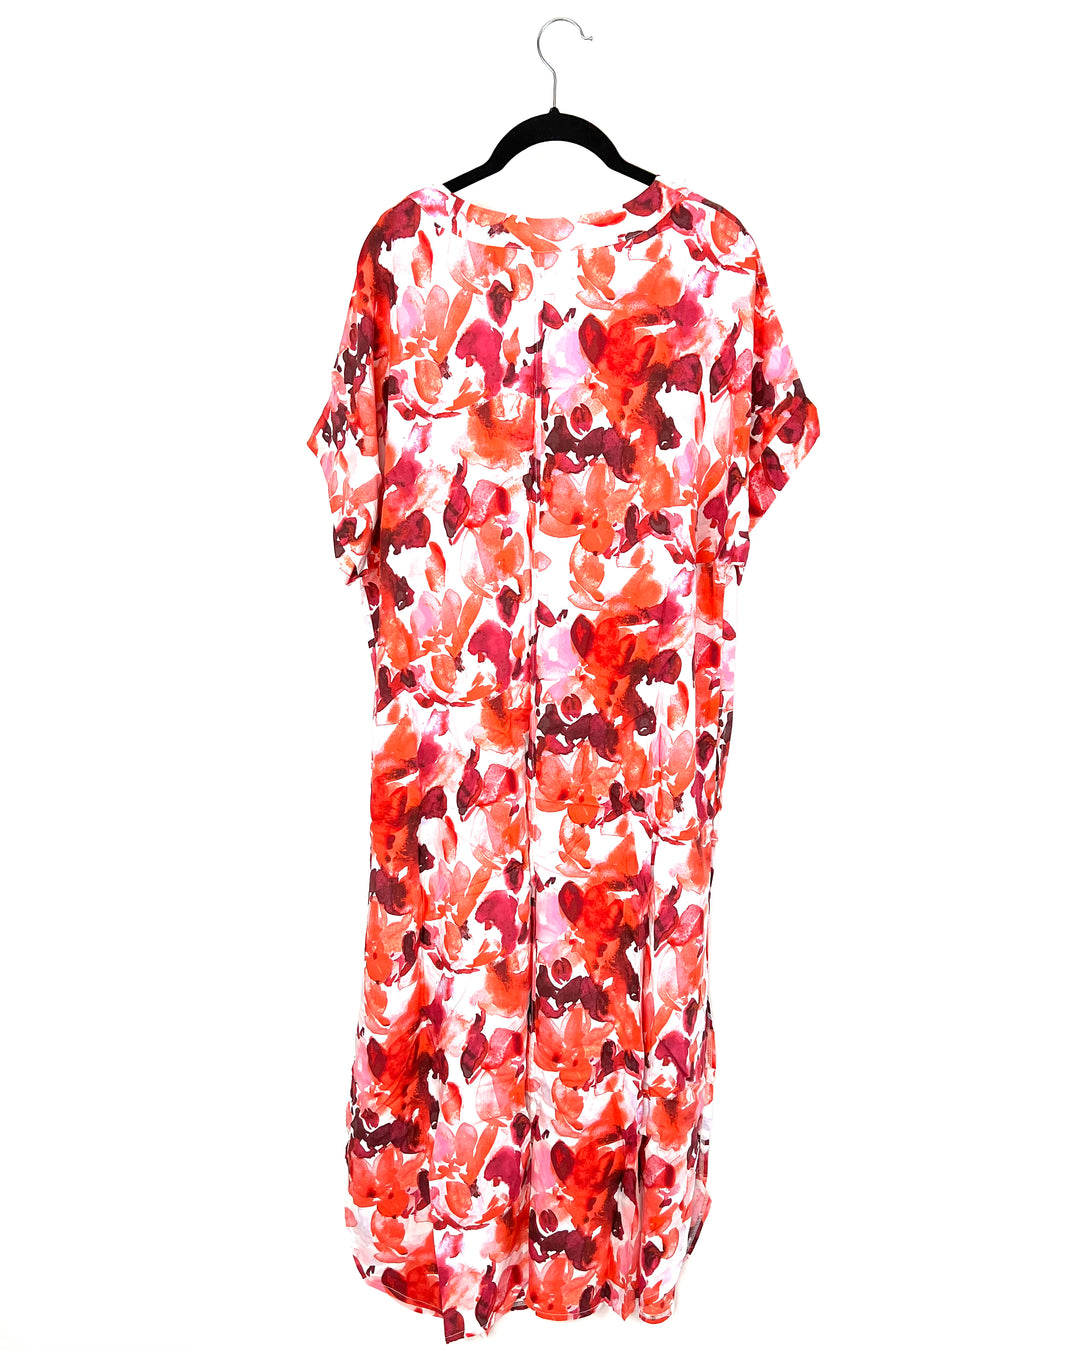 Floral Short Sleeve Loungewear Dress - Small